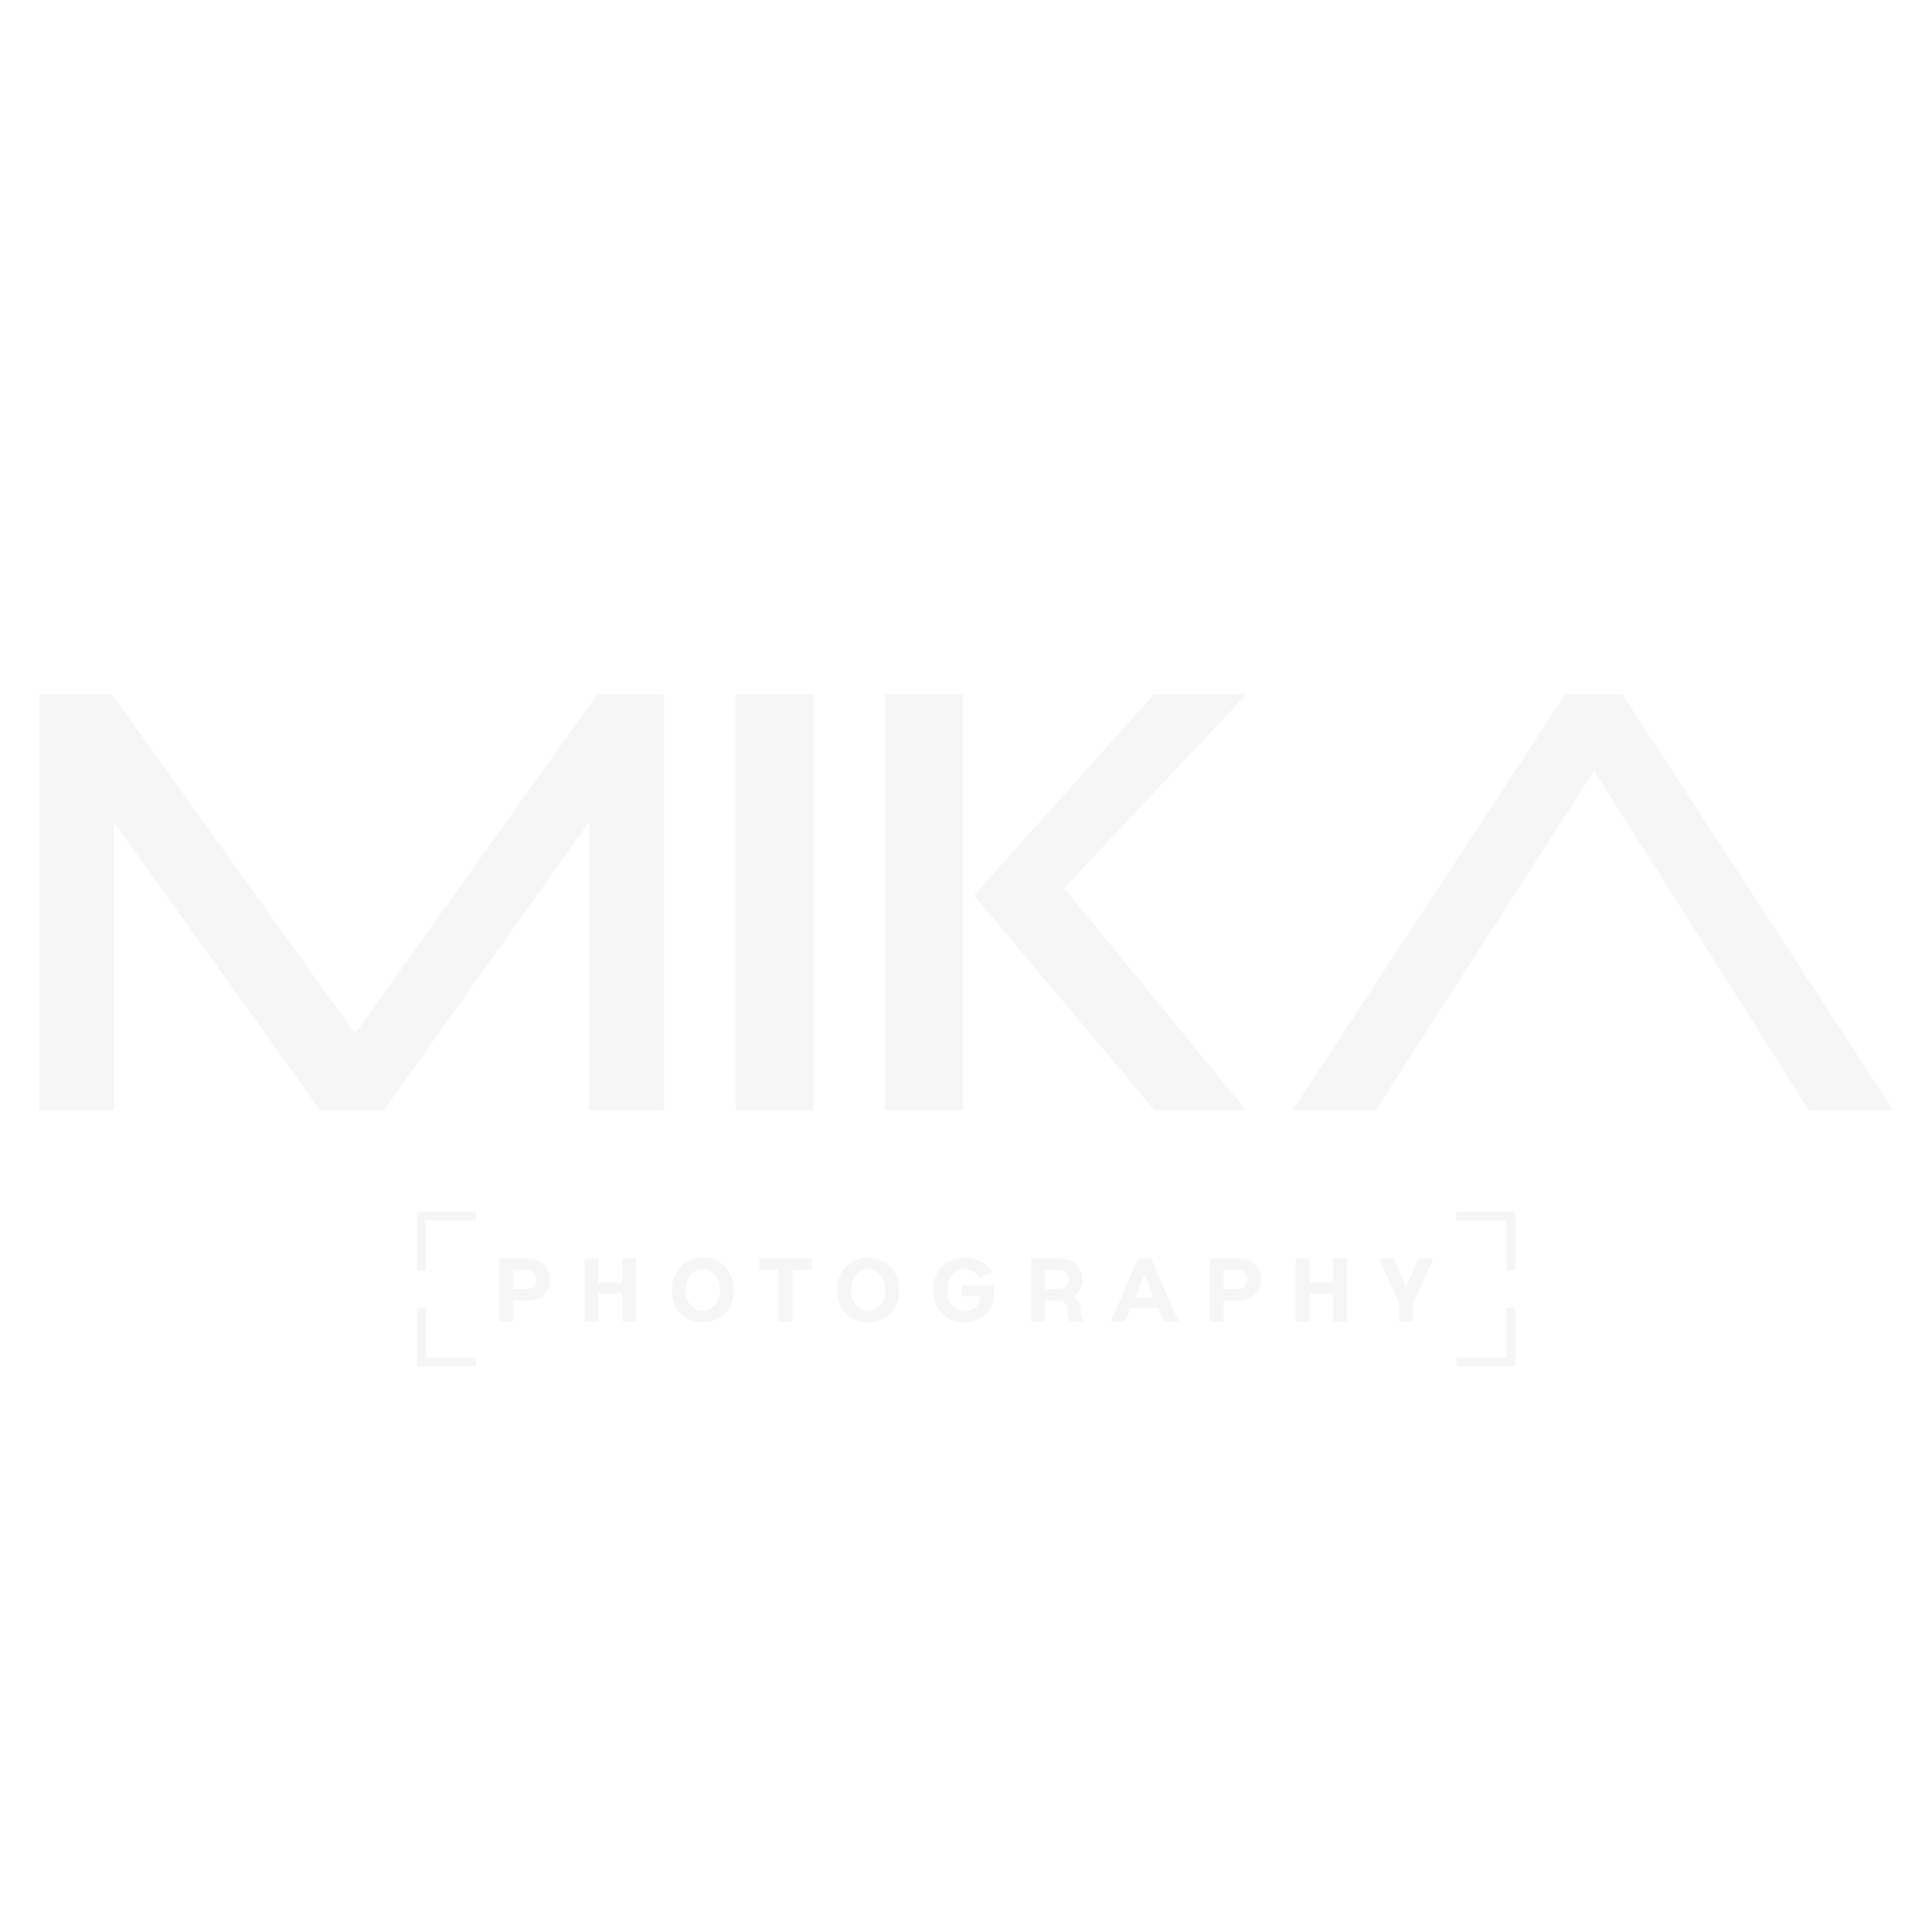 #mikalafotografa